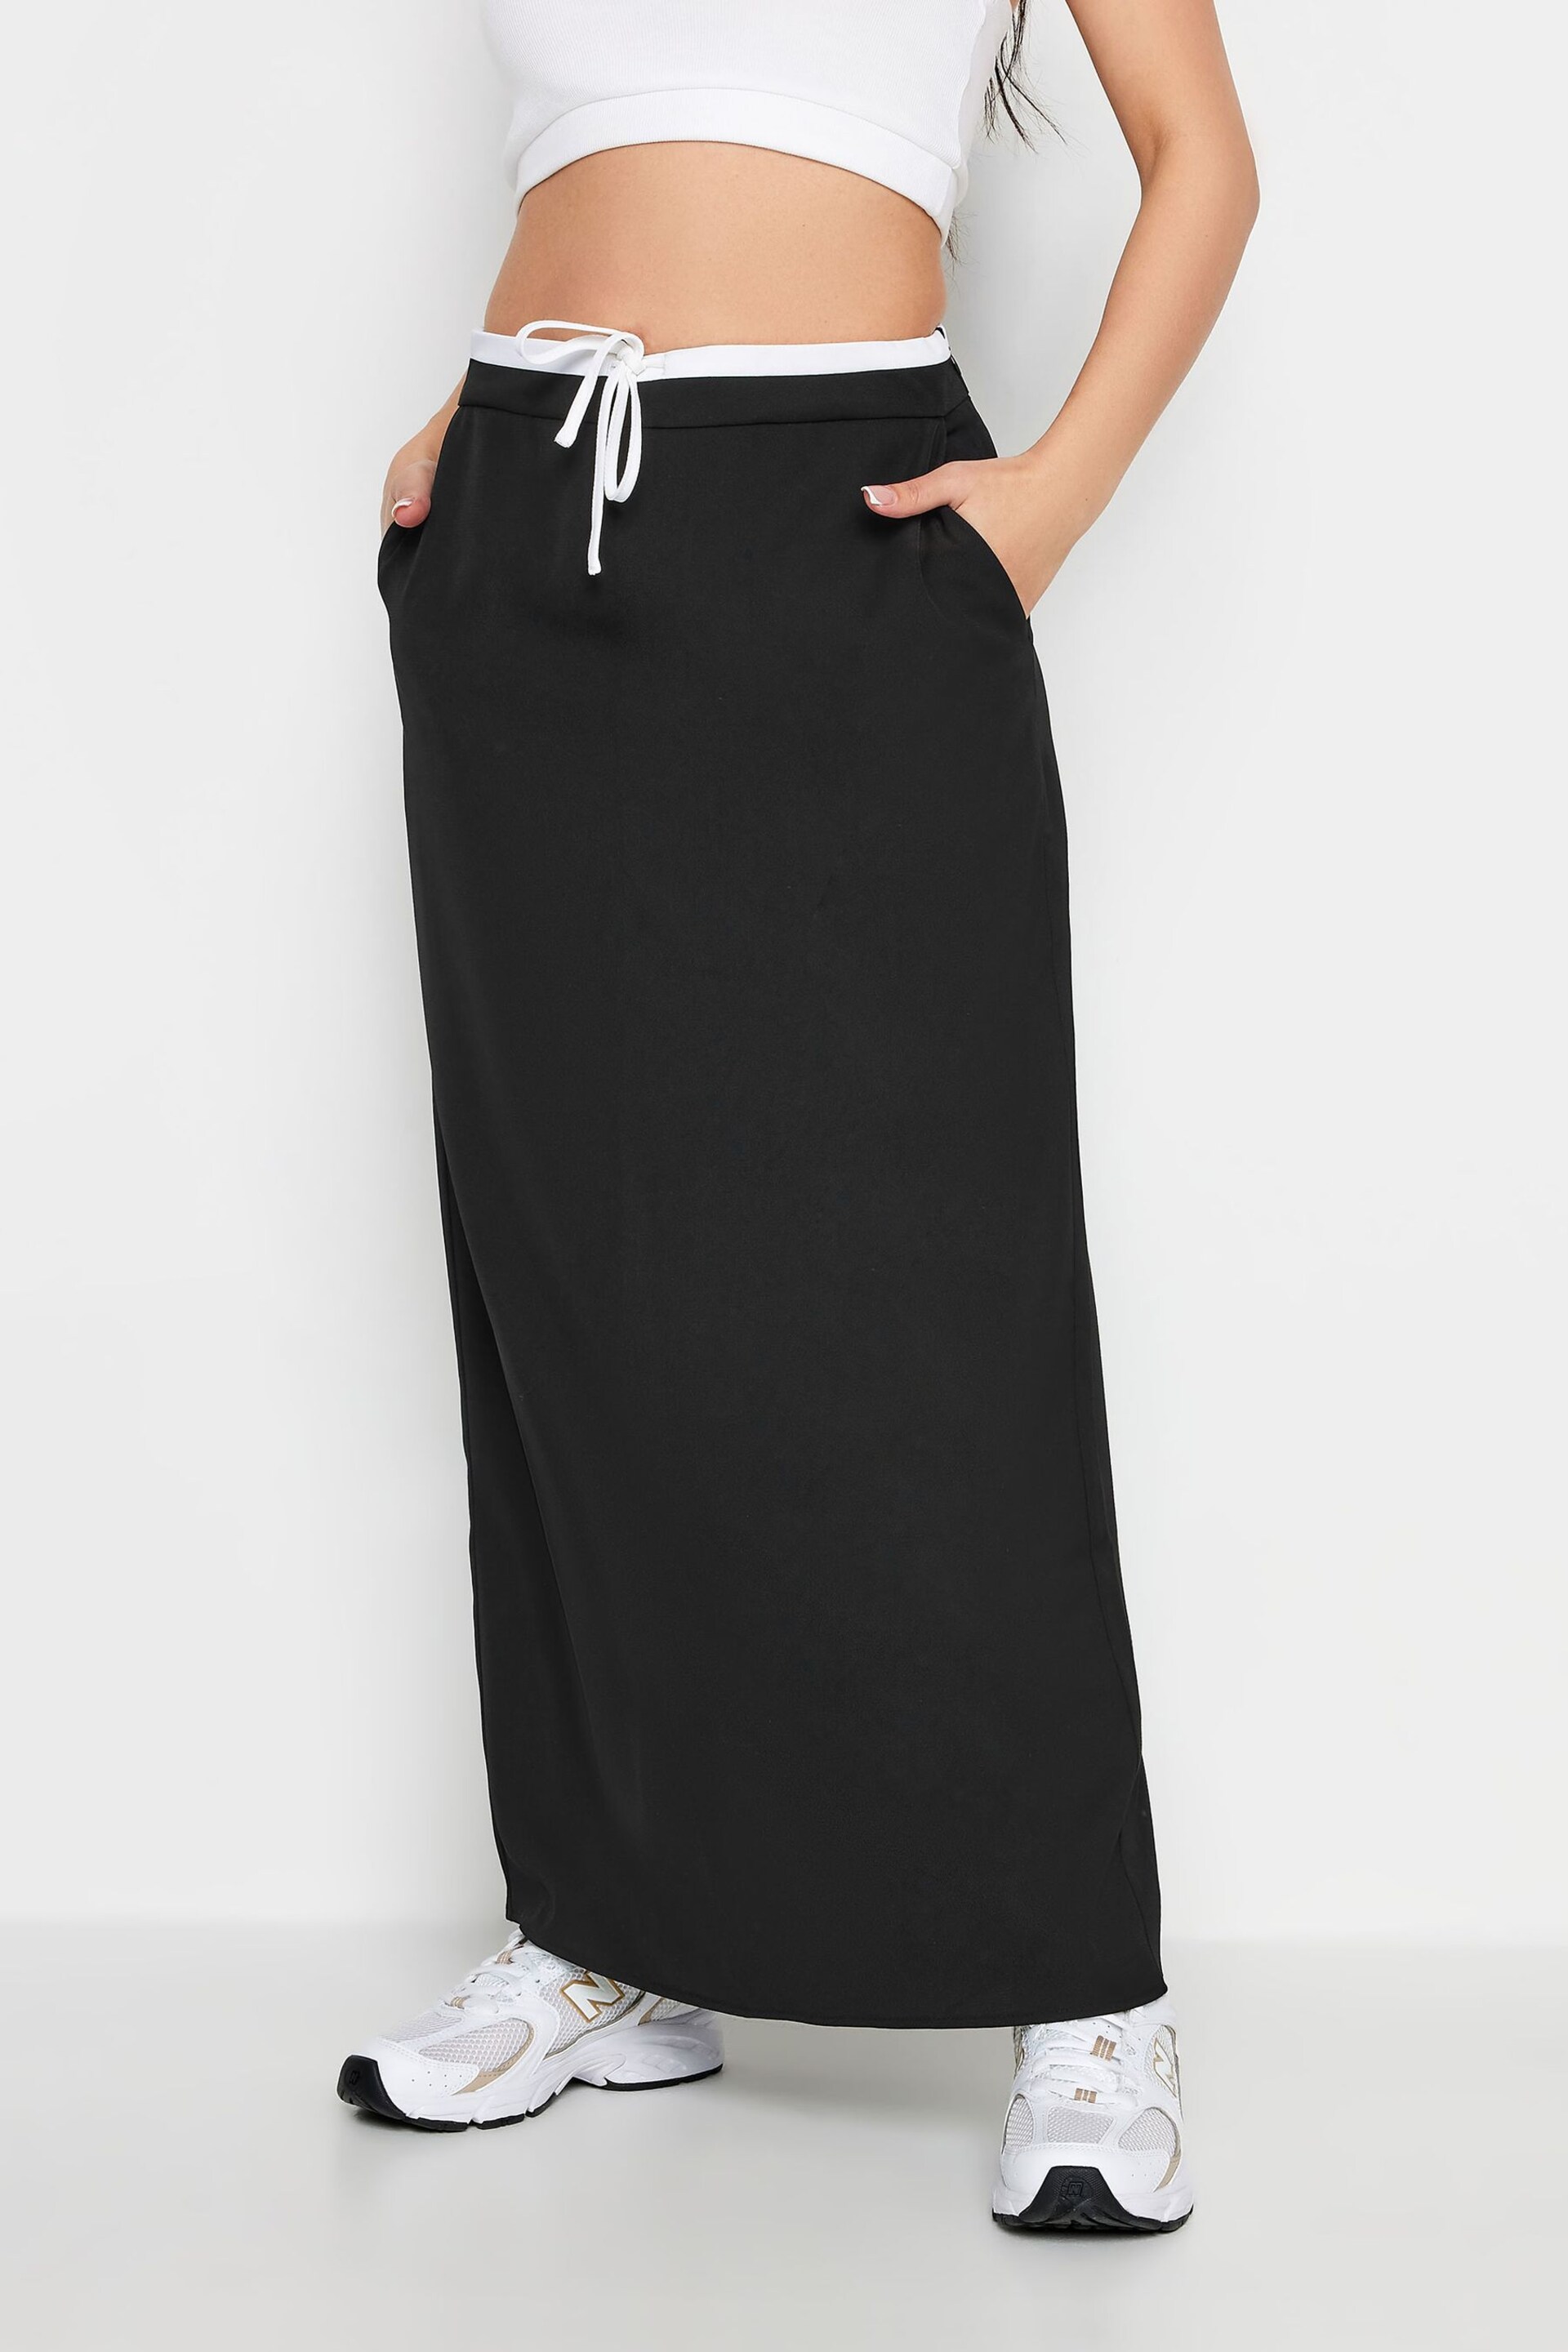 PixieGirl Petite Black Contrast Waist Skirt - Image 1 of 3